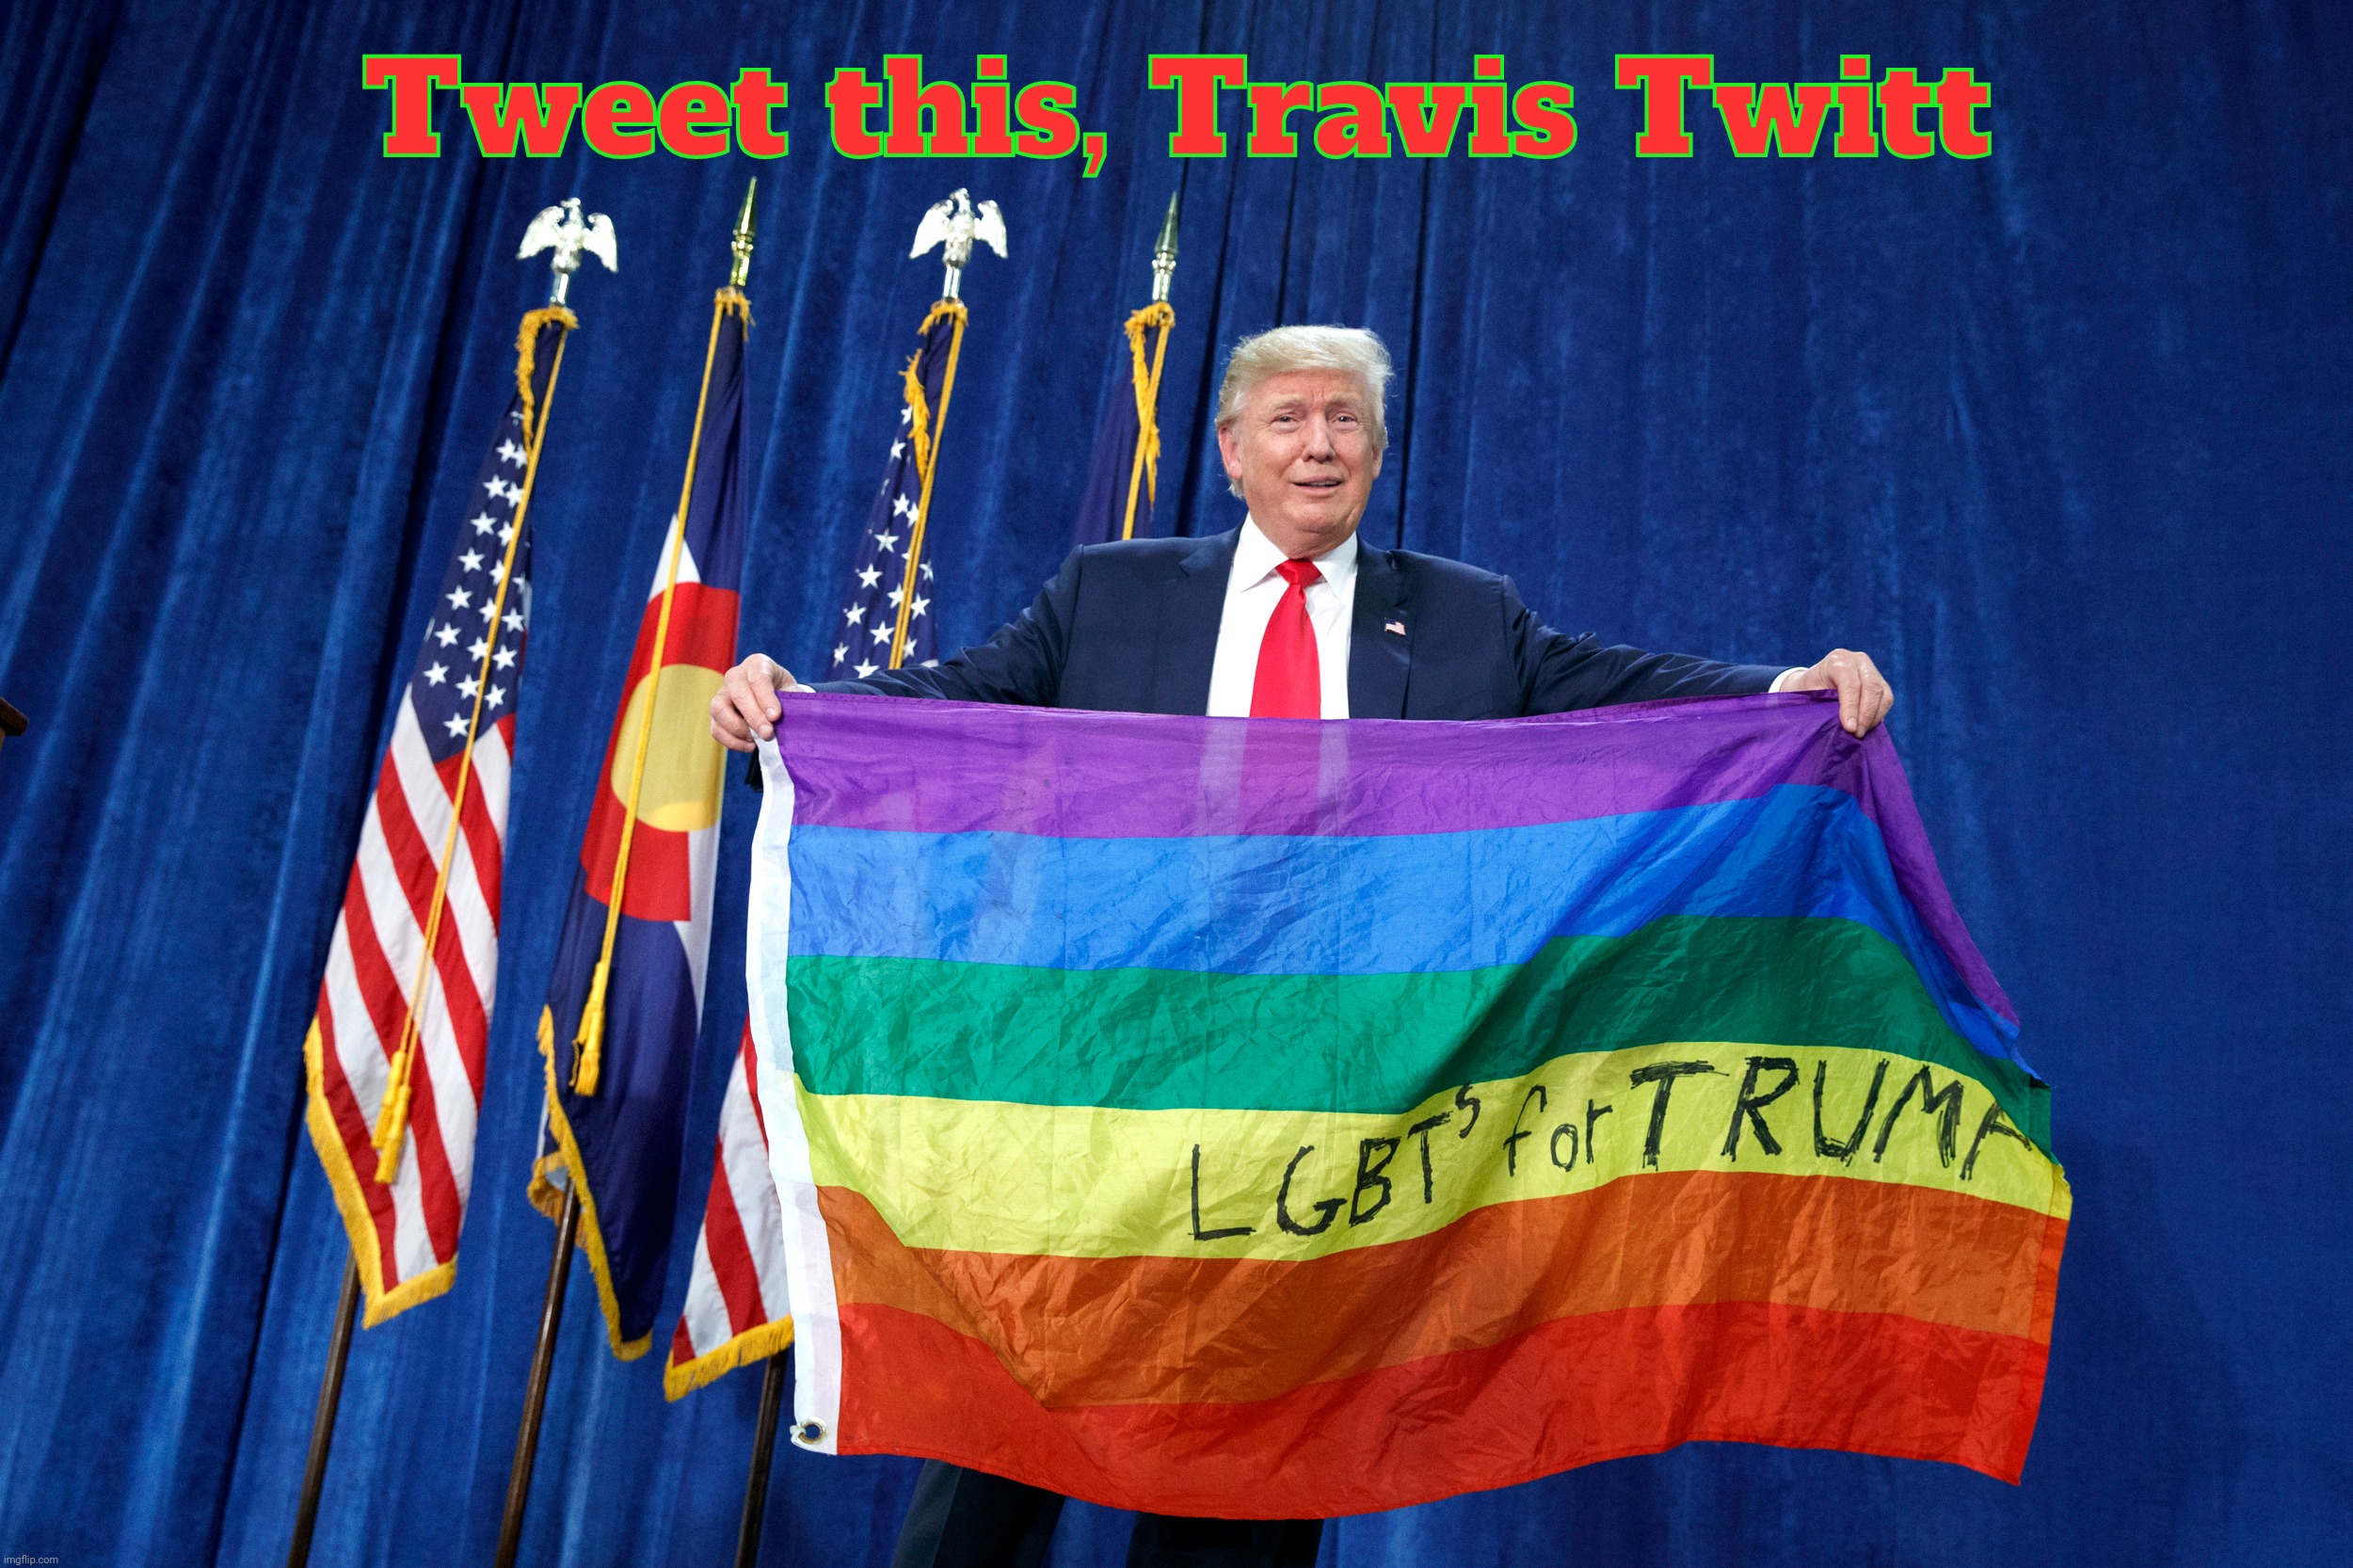 Woke based Trump, Travis Twitt is out of place | Tweet this, Travis Twitt | image tagged in donald trump,trump,travis twitter,lgbt,based,woke | made w/ Imgflip meme maker